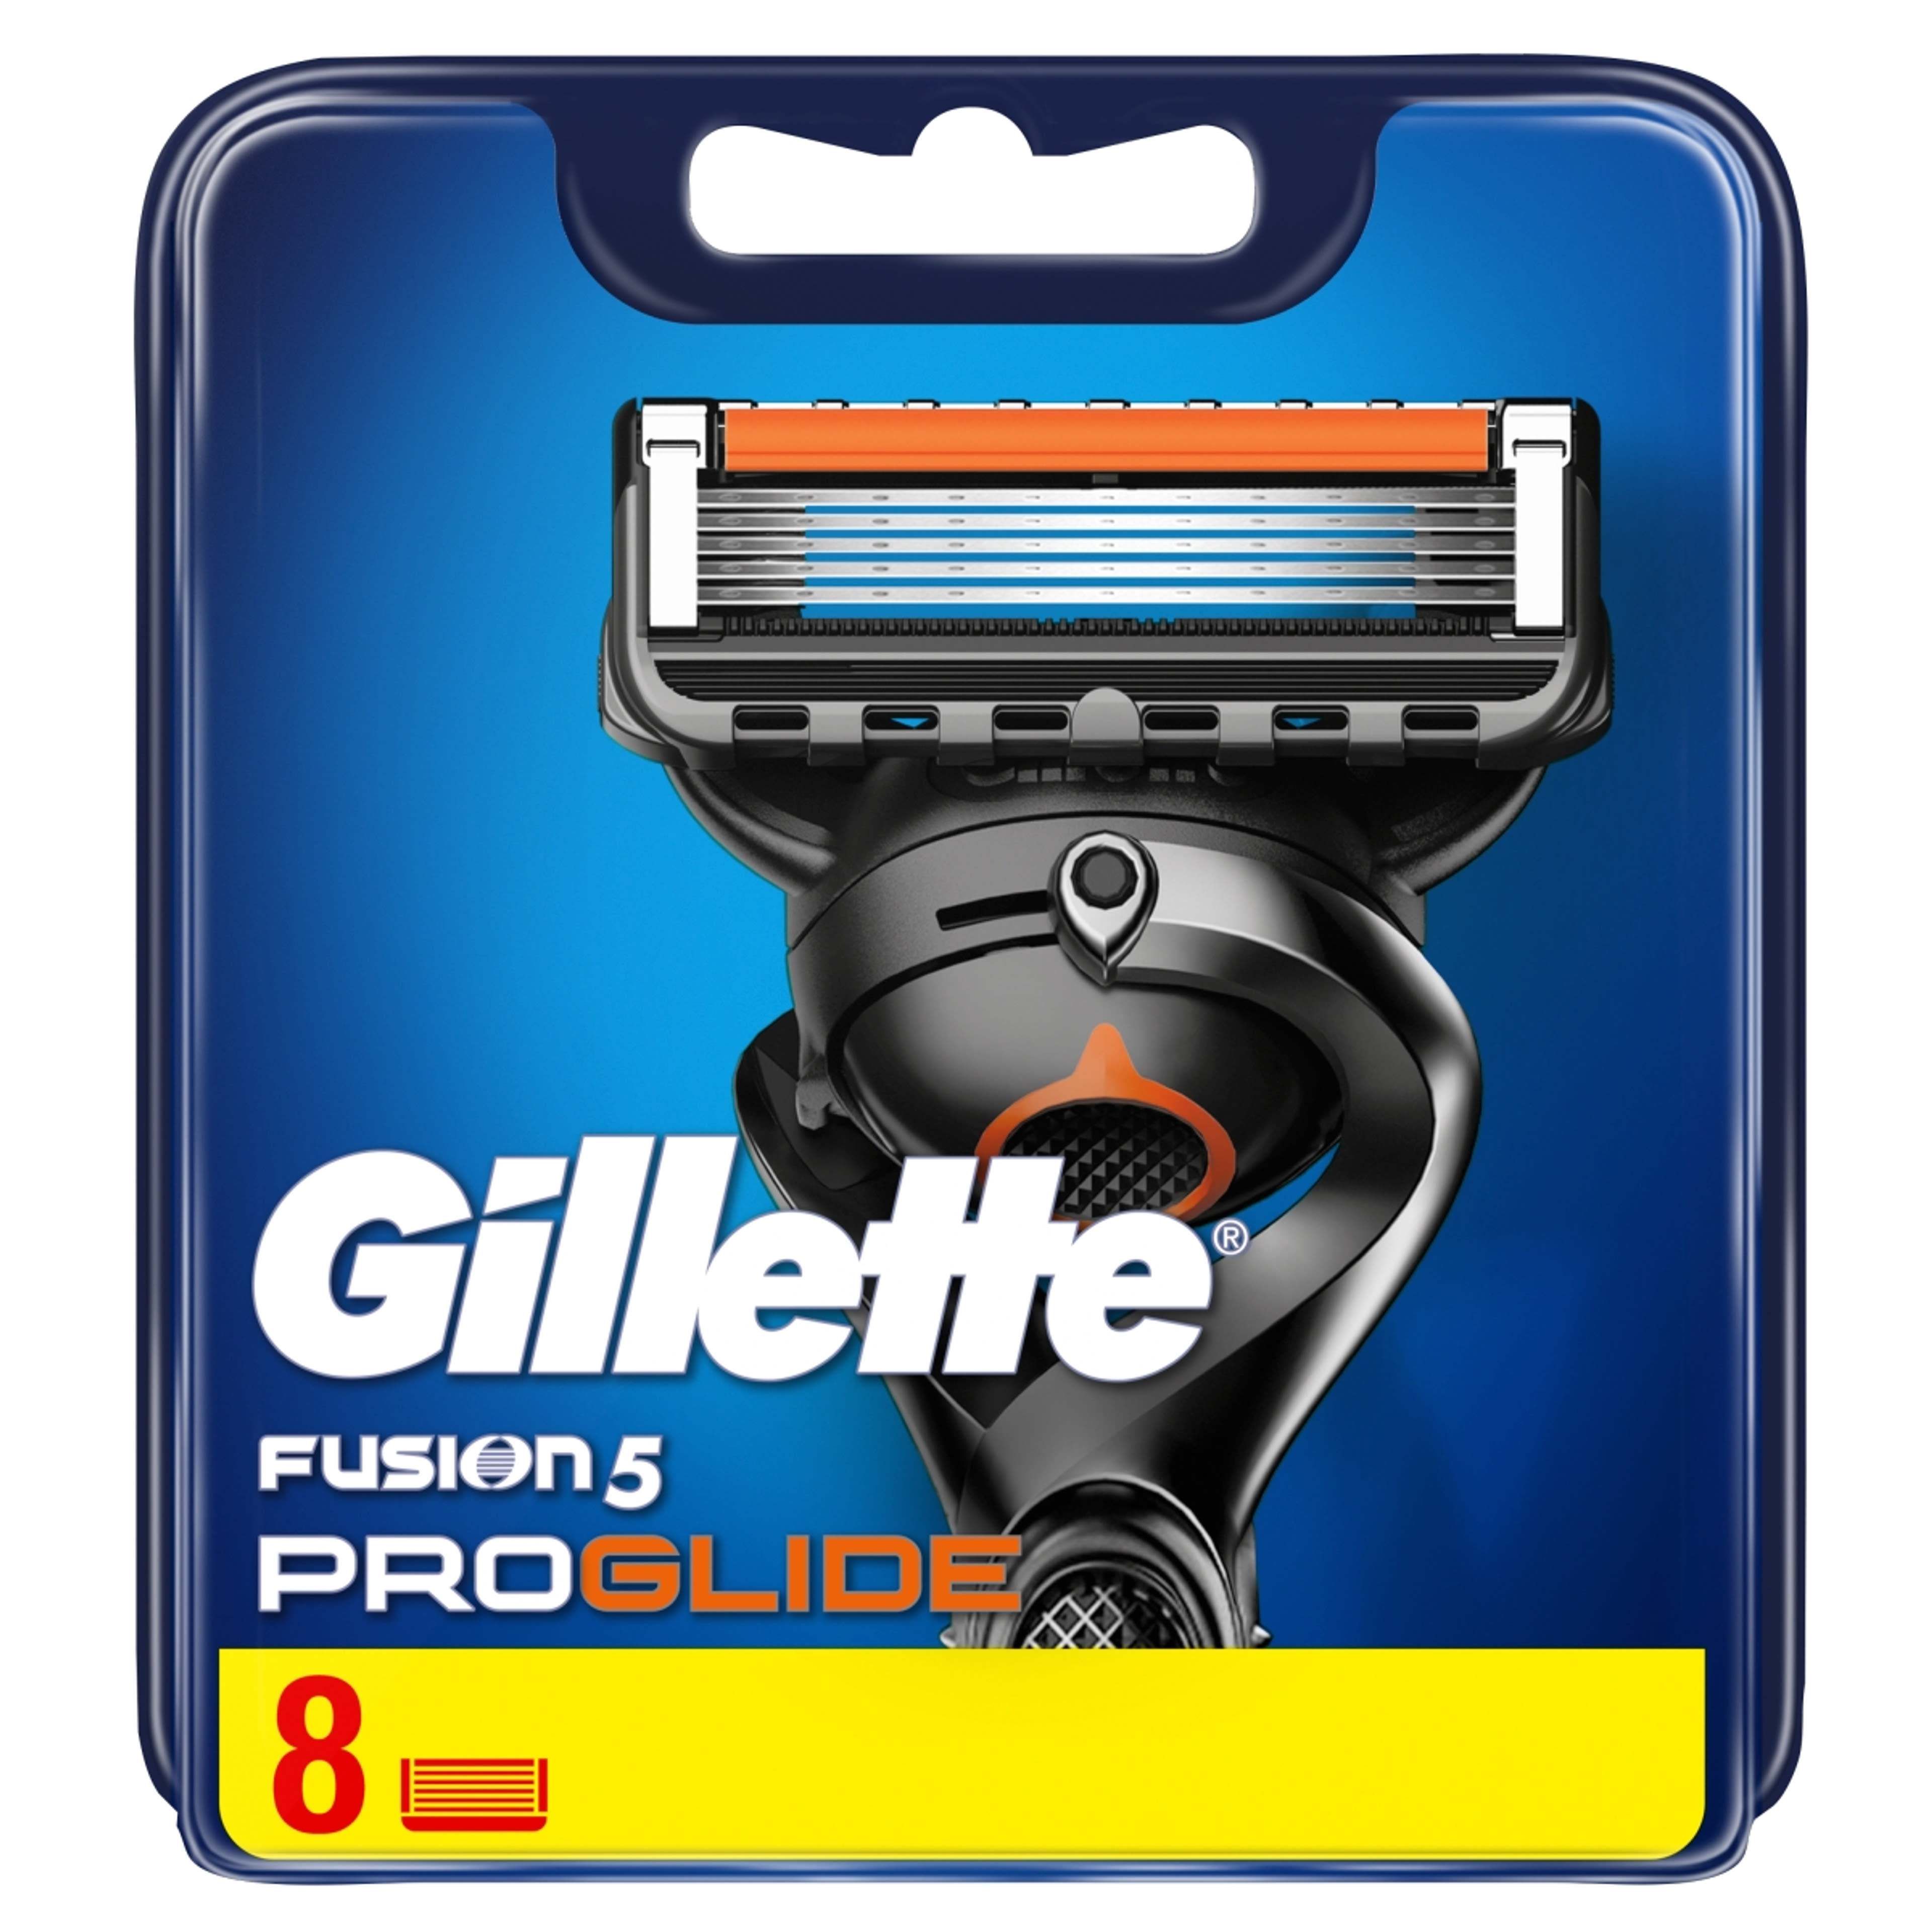 Gillette ProGlide borotvabetét - 8 db